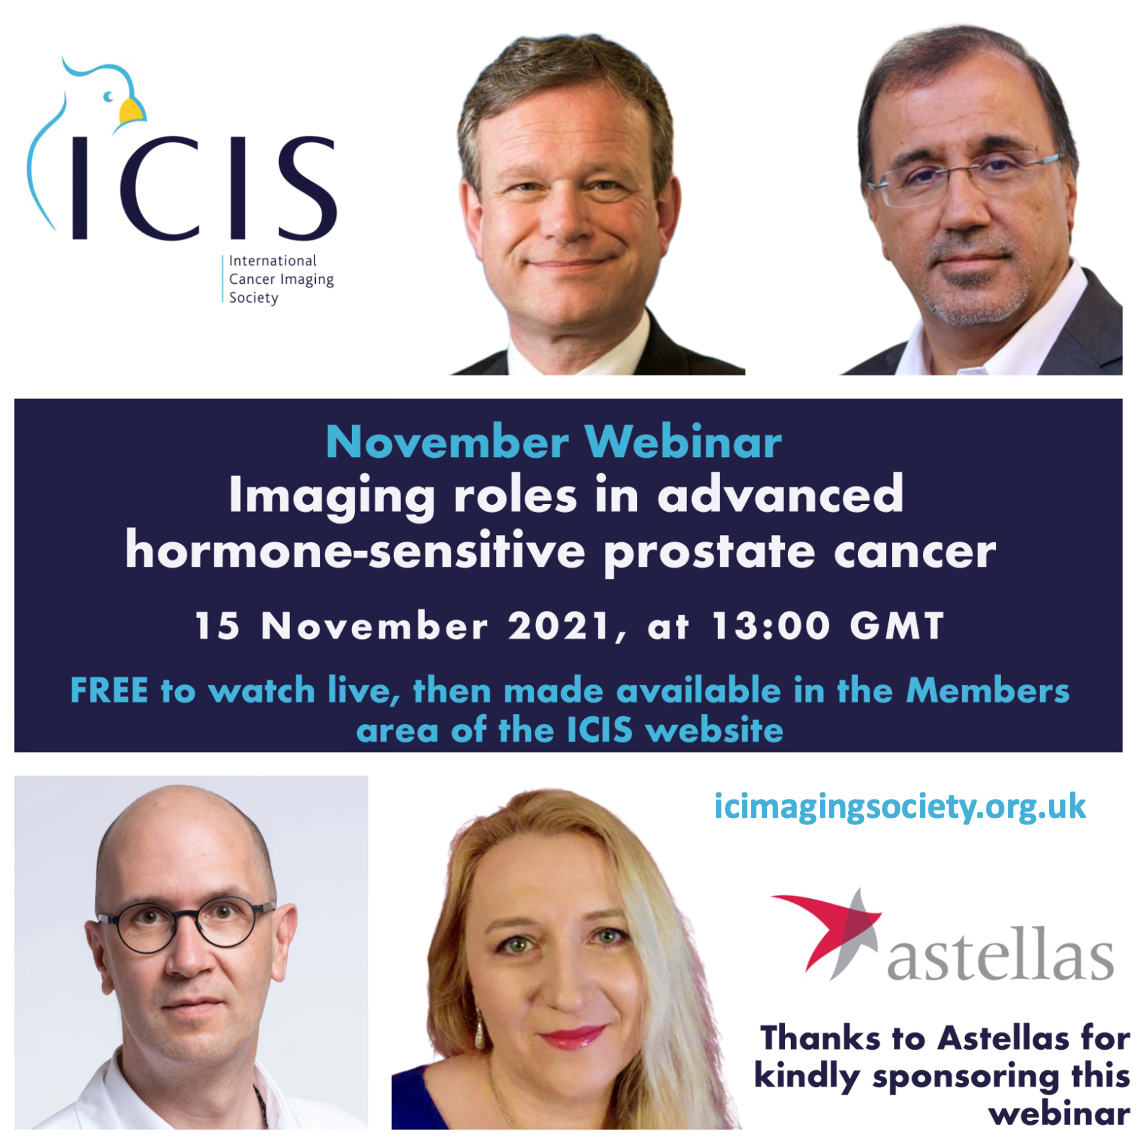 ICIS - International Cancer Imaging Society - November webinar - Imaging roles in advanced hormone-sensitive prostate cancer